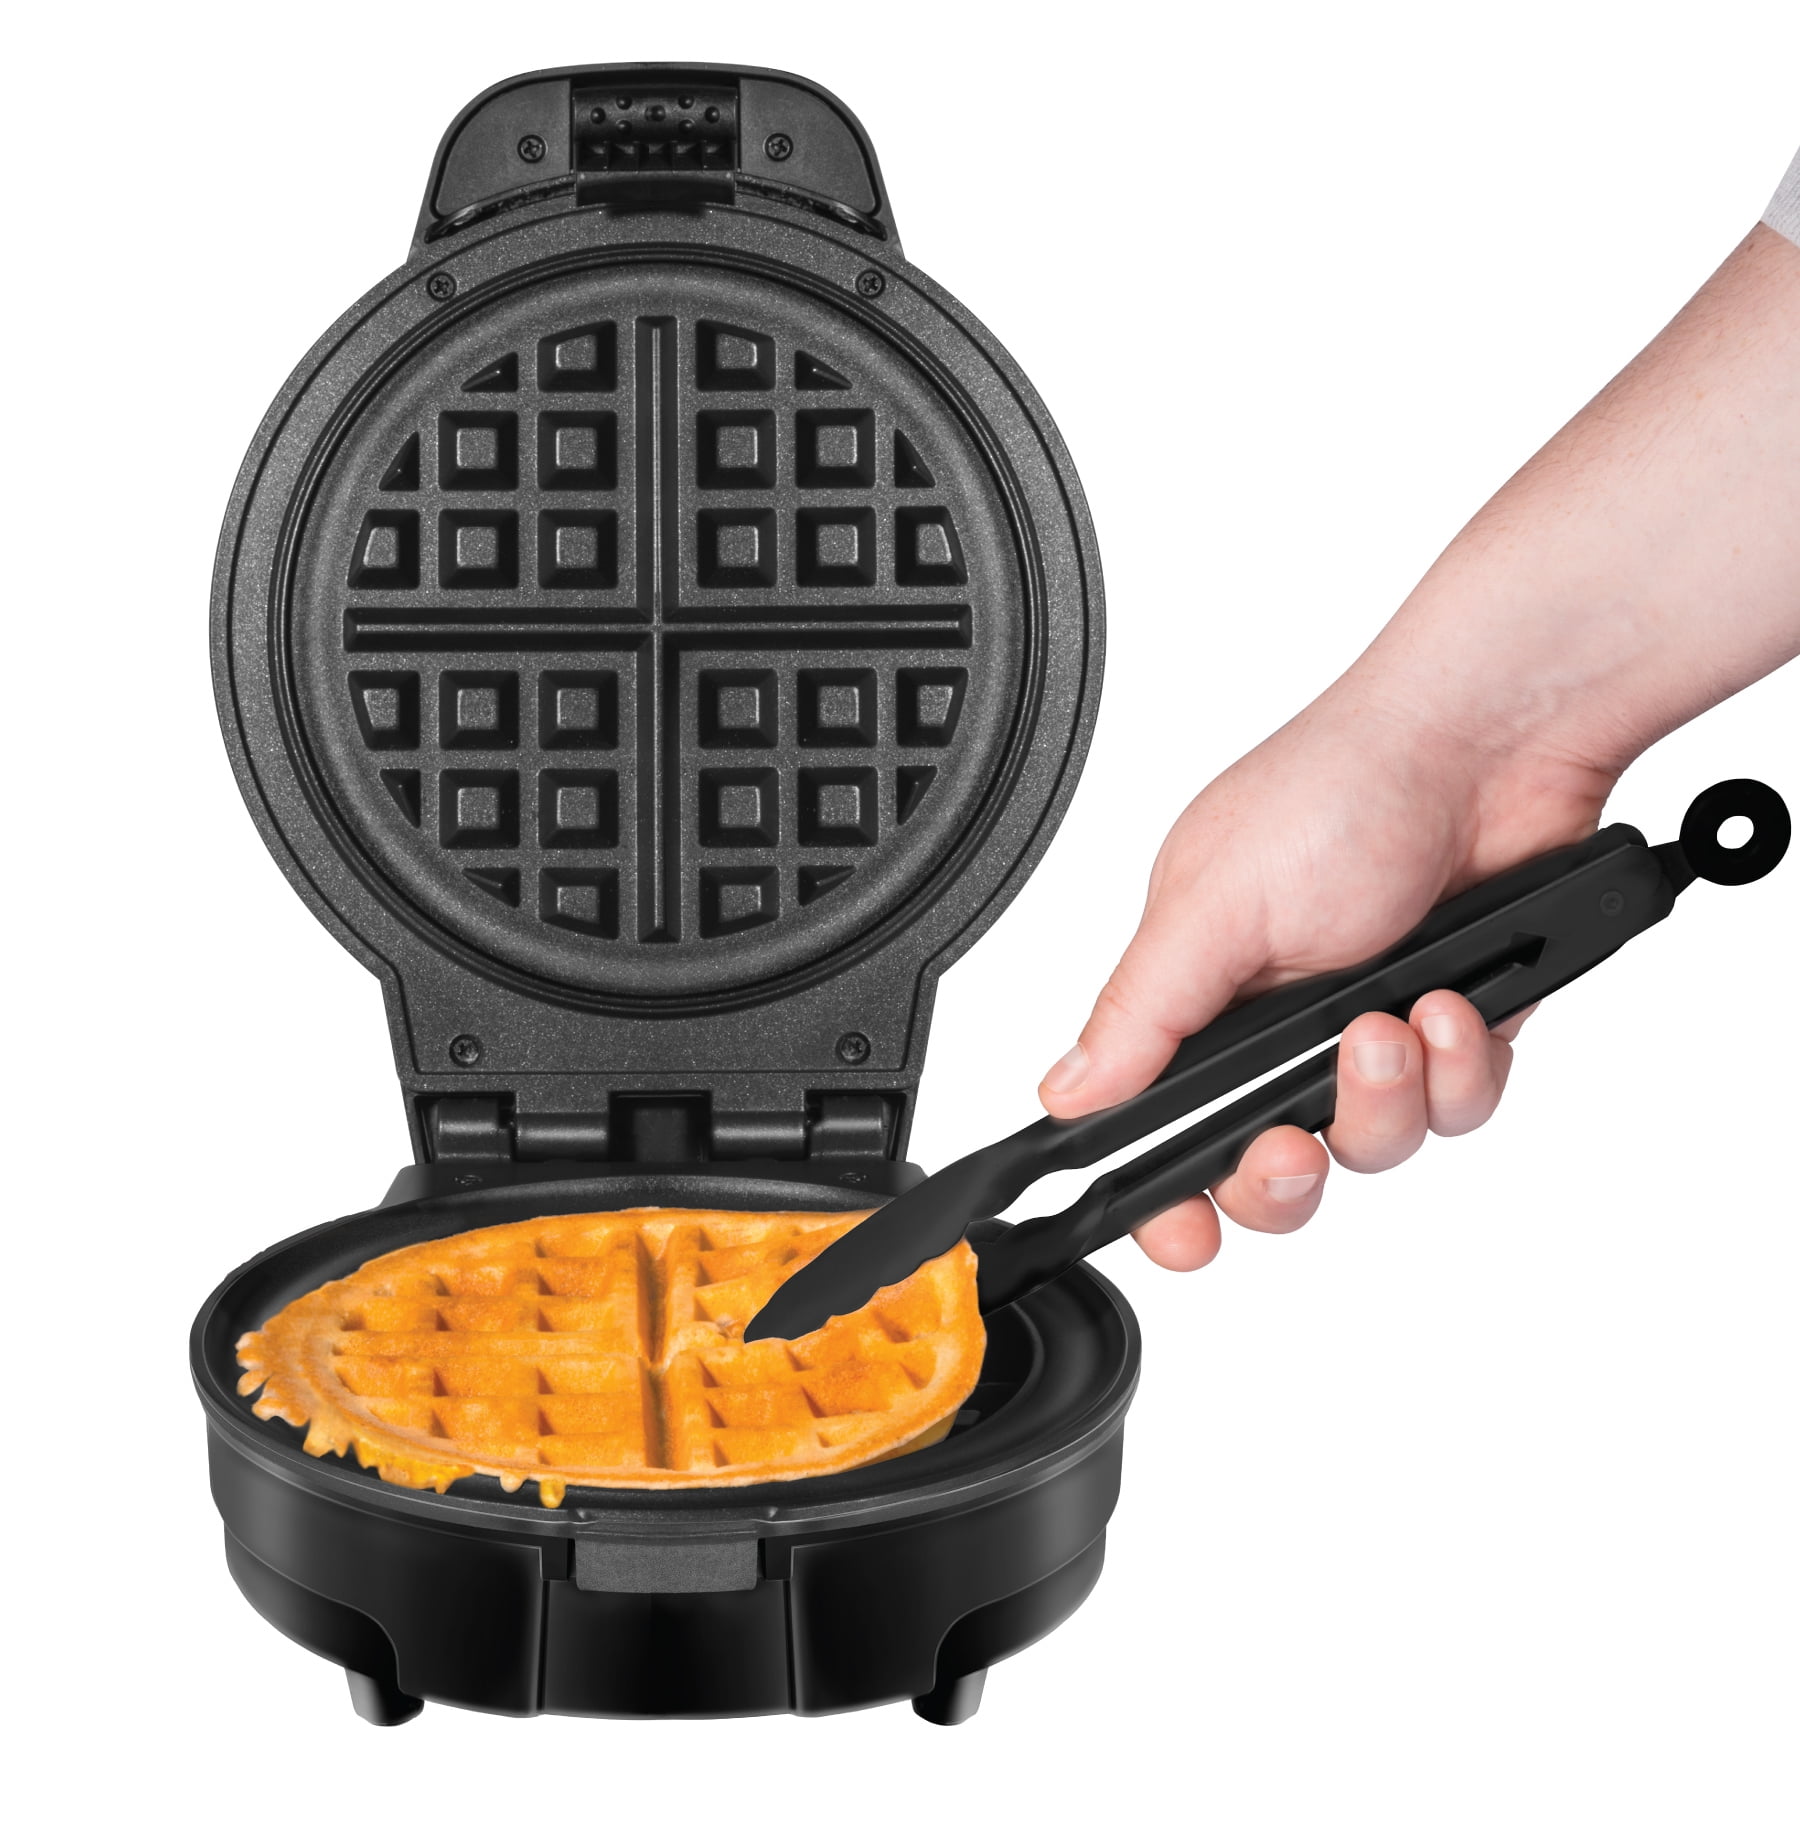 Chefman Anti-Overflow Belgian Waffle Maker w/ Shade Selector Black